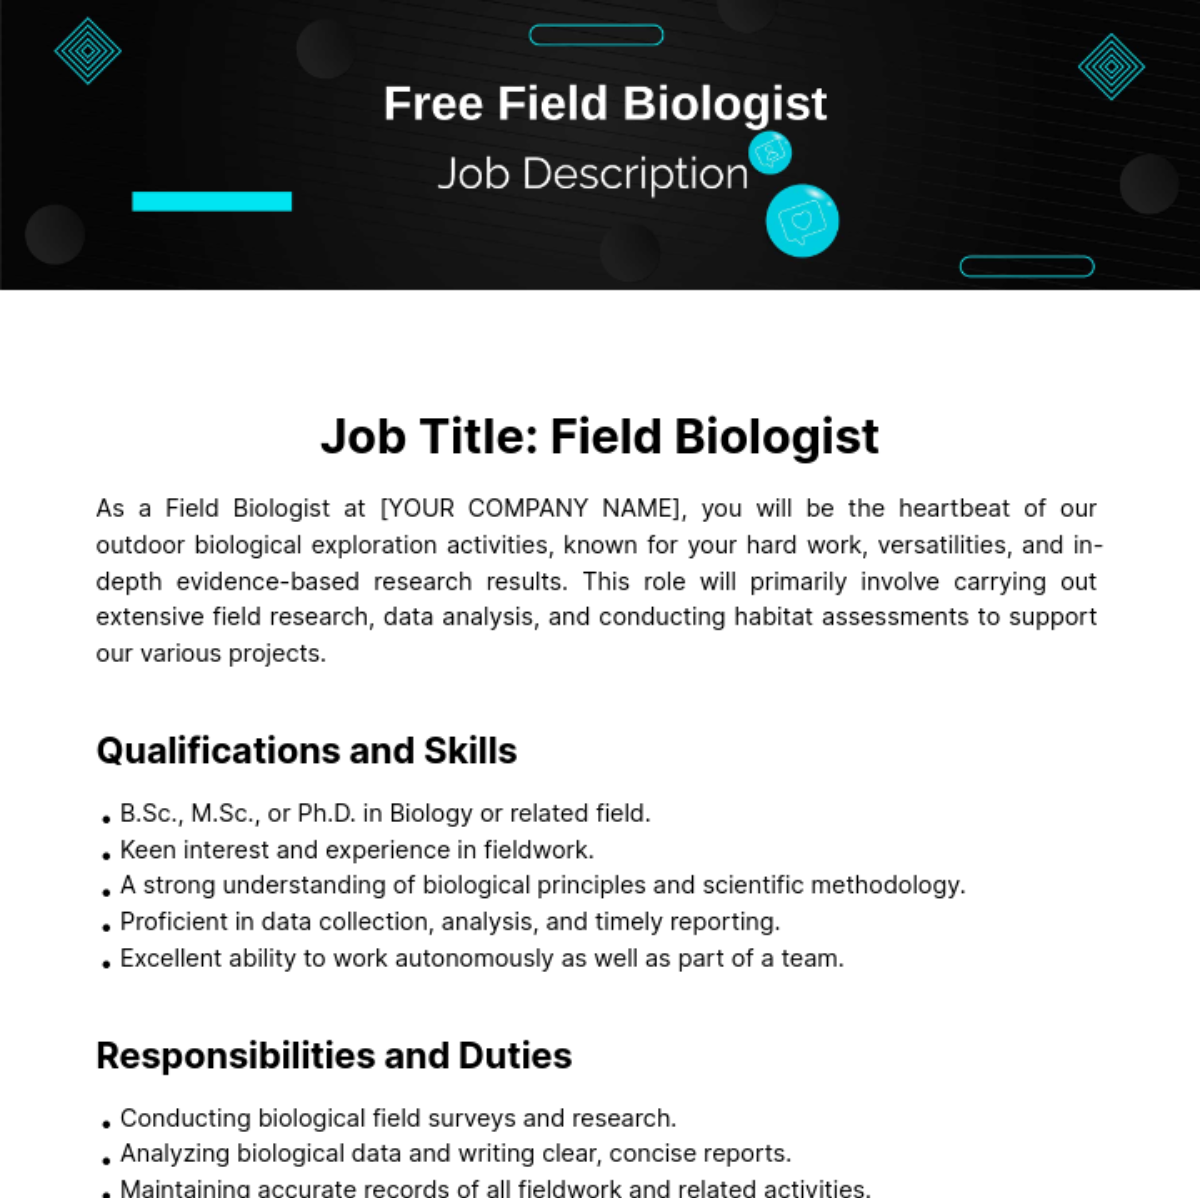 Free Field Biologist Job Description Template